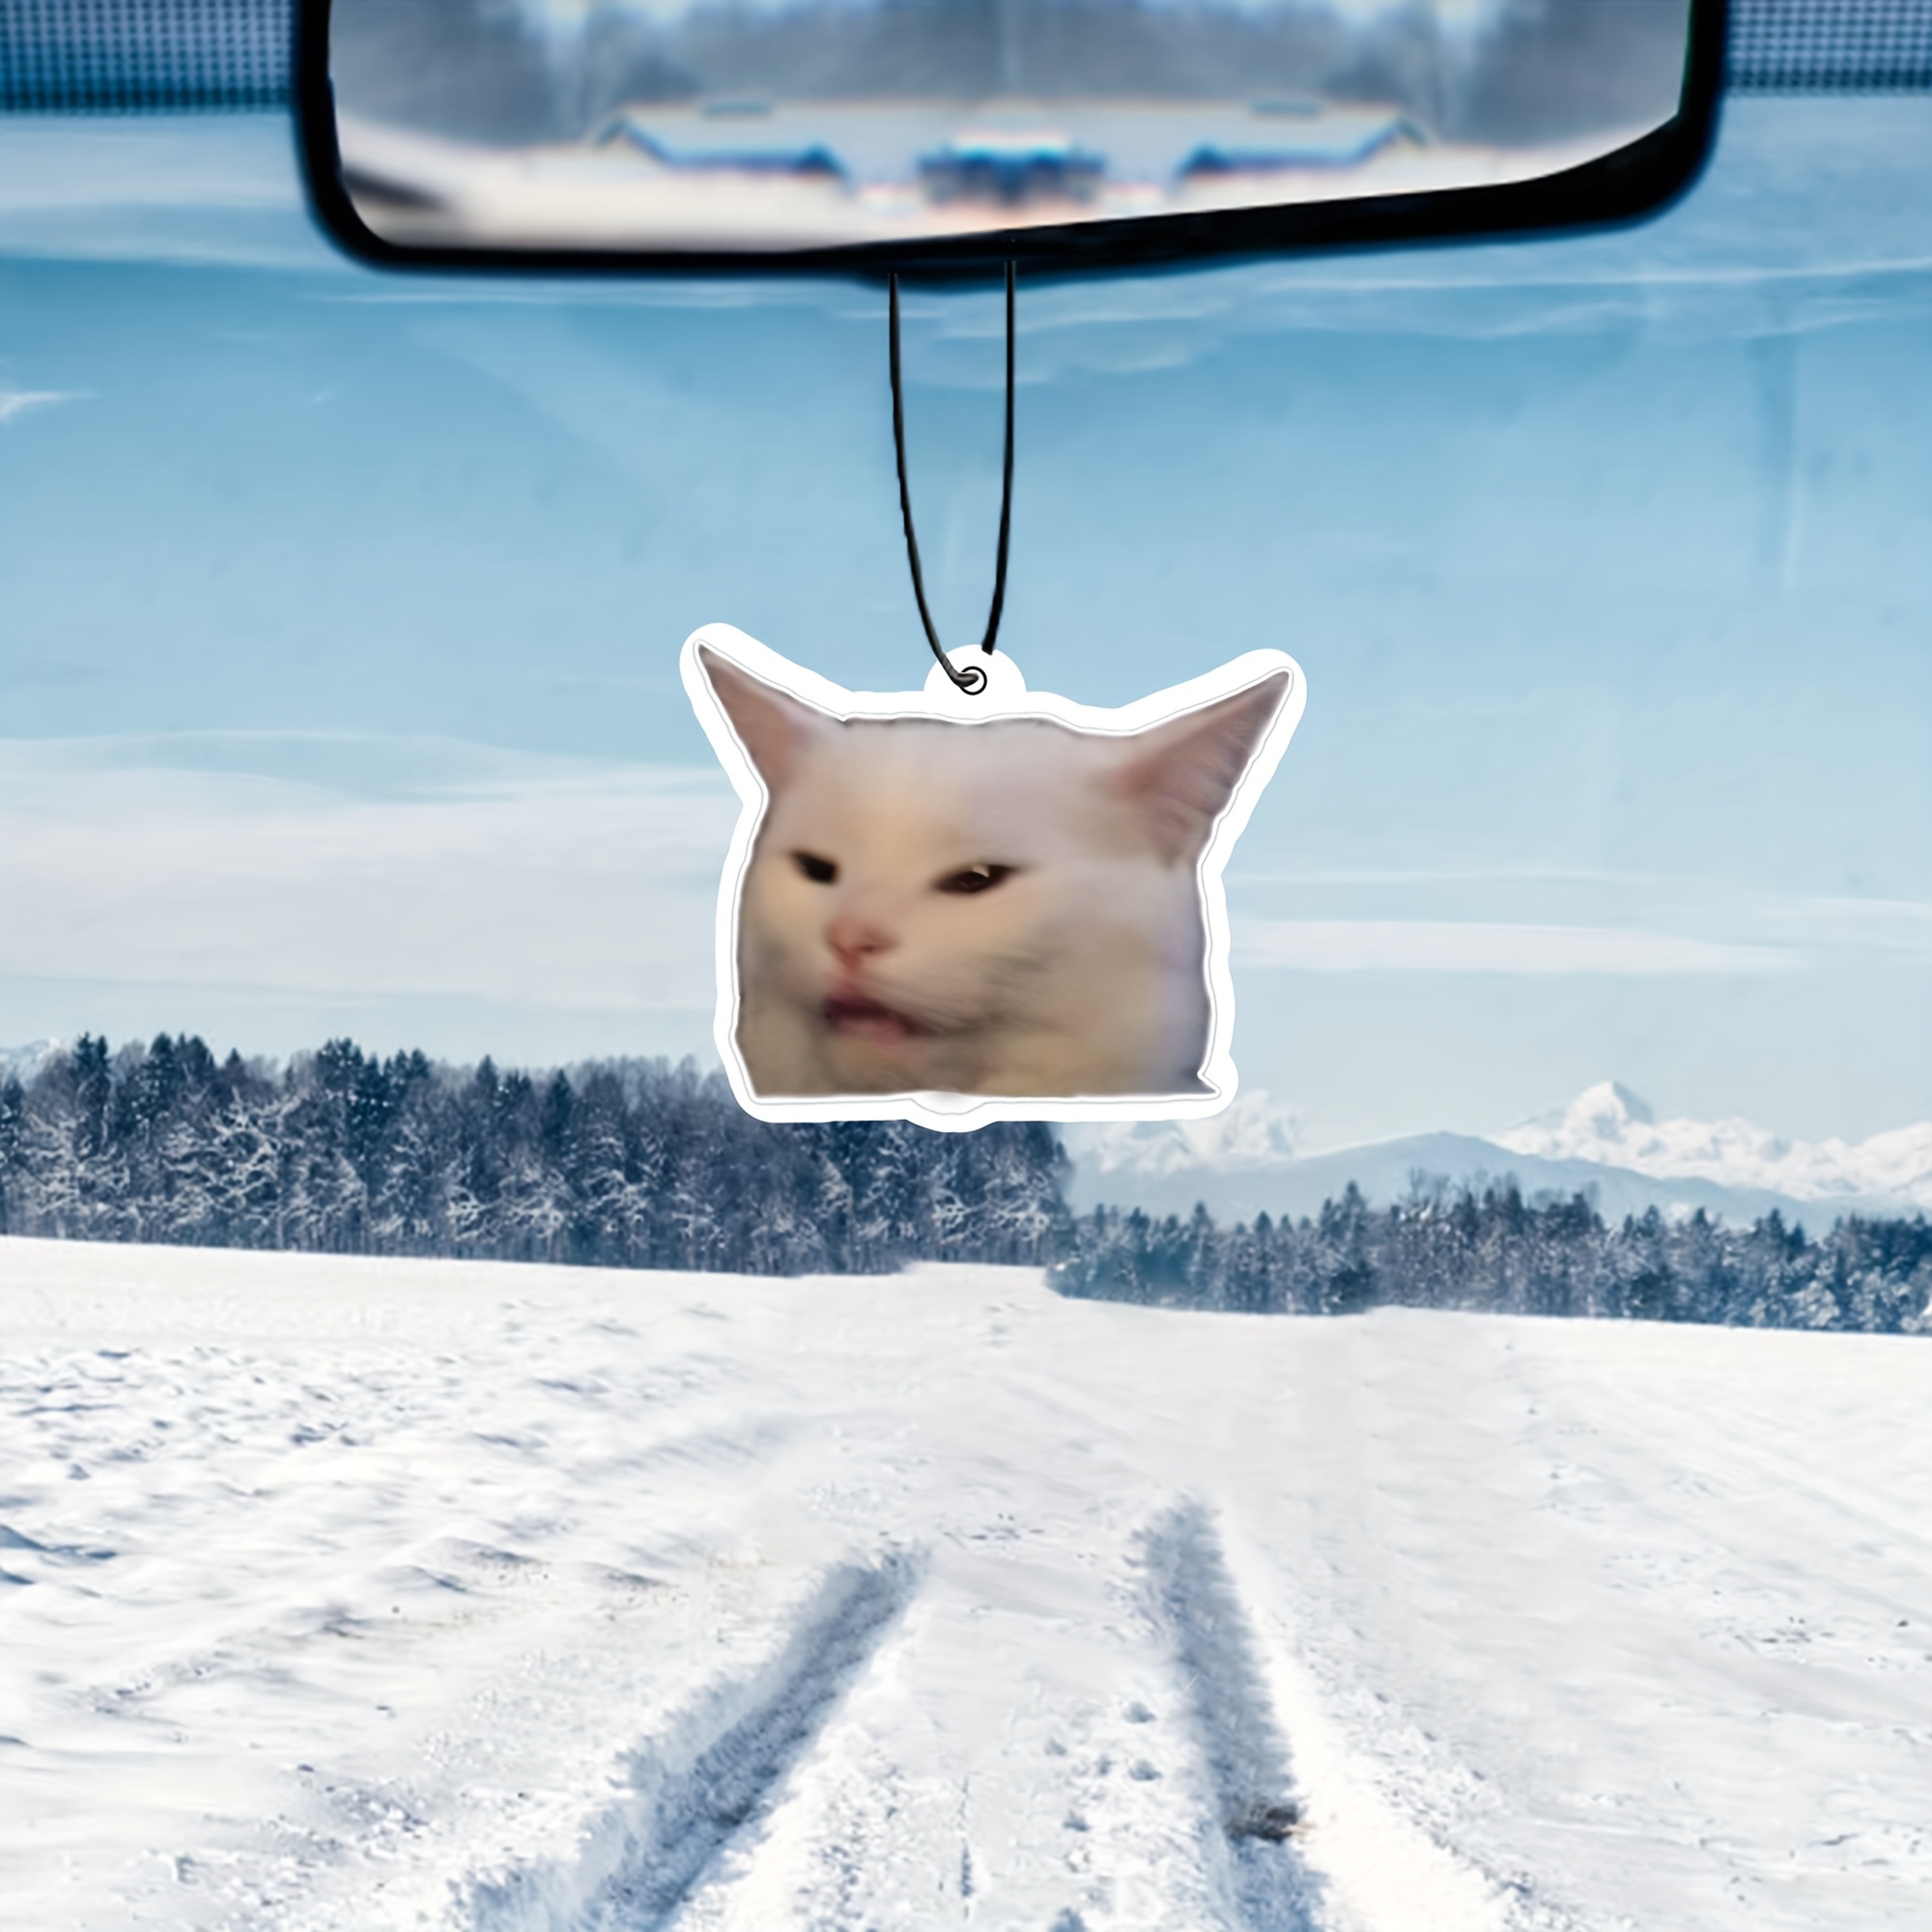 Chihuahua Meme Car Air Freshener